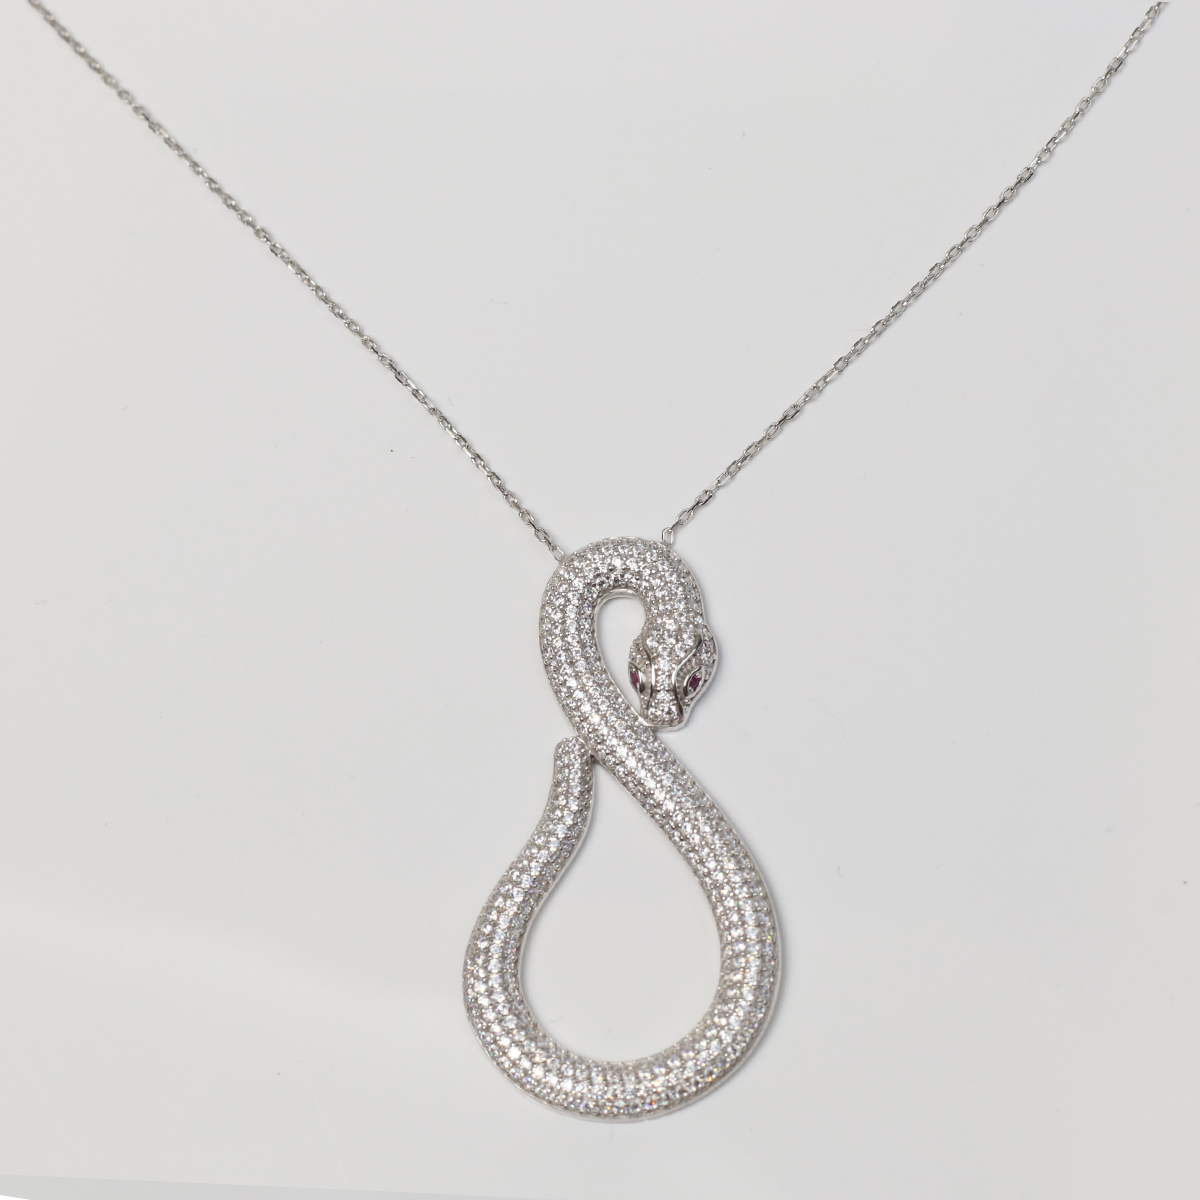 Silver Necklace Exclusive Collection Snake Design 925 Silver 